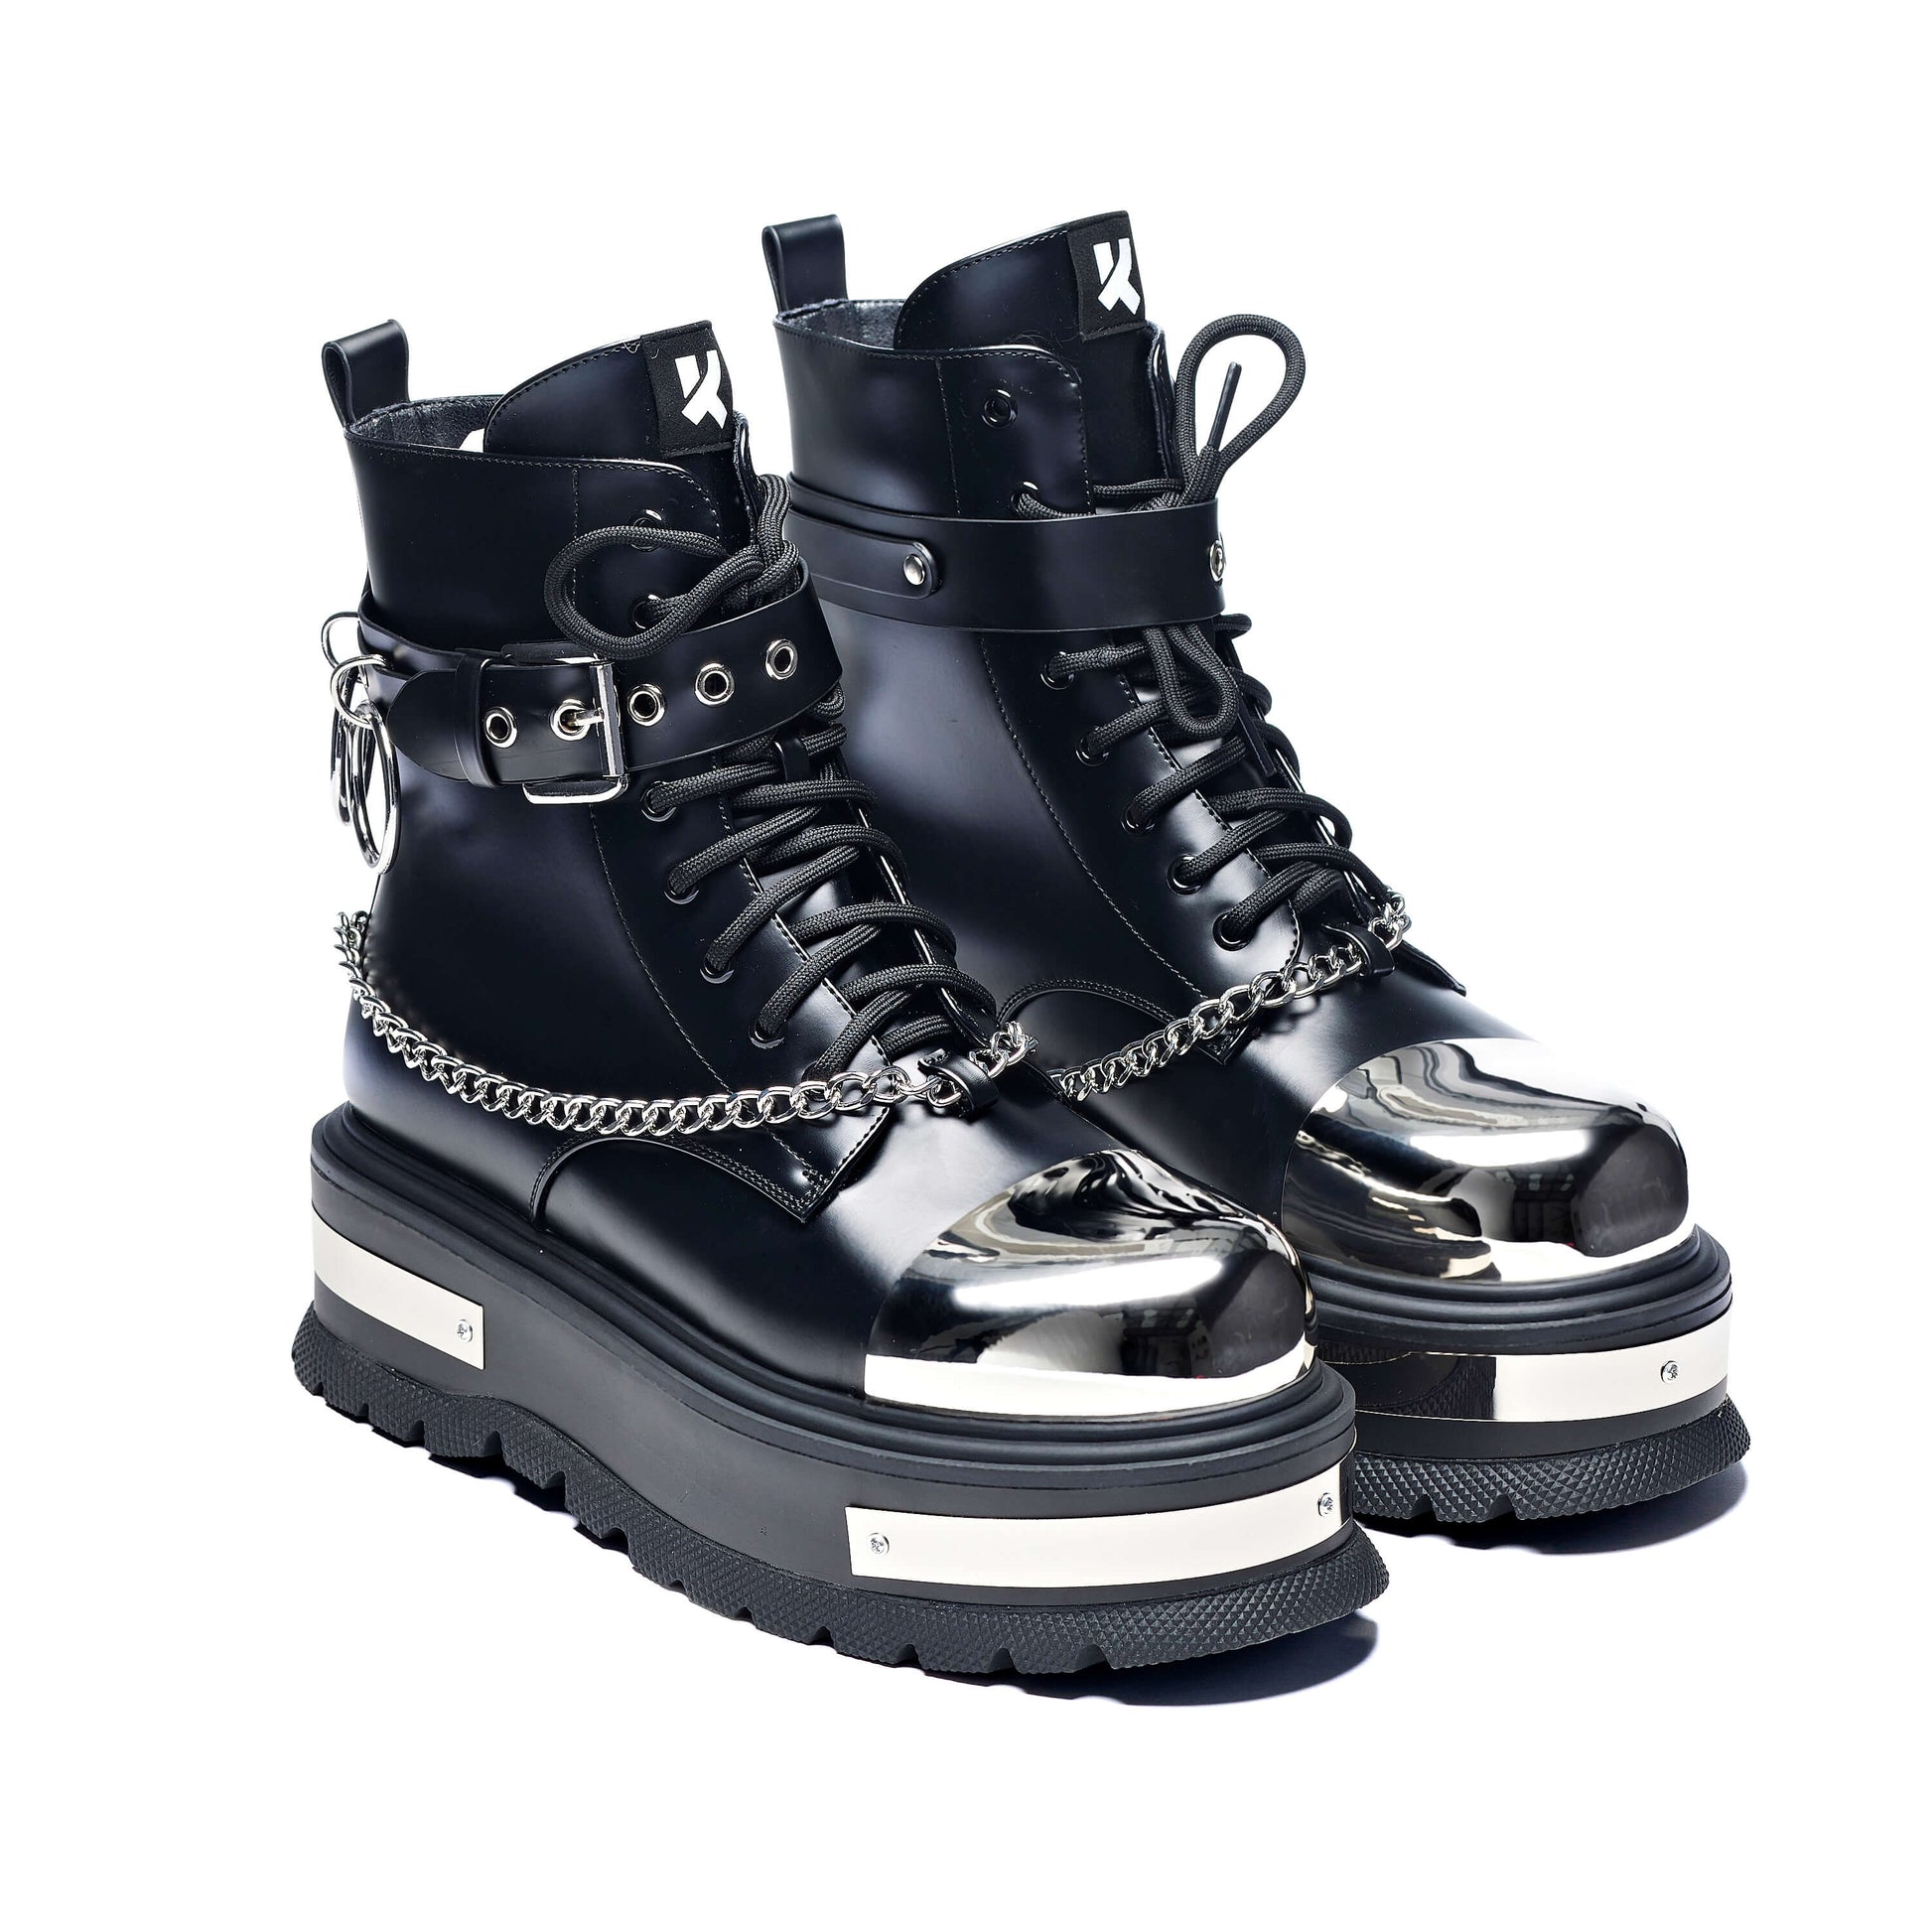 Borin Men's Hardware Platform Boots - Ankle Boots - KOI Footwear - Black - Three-Quarter View